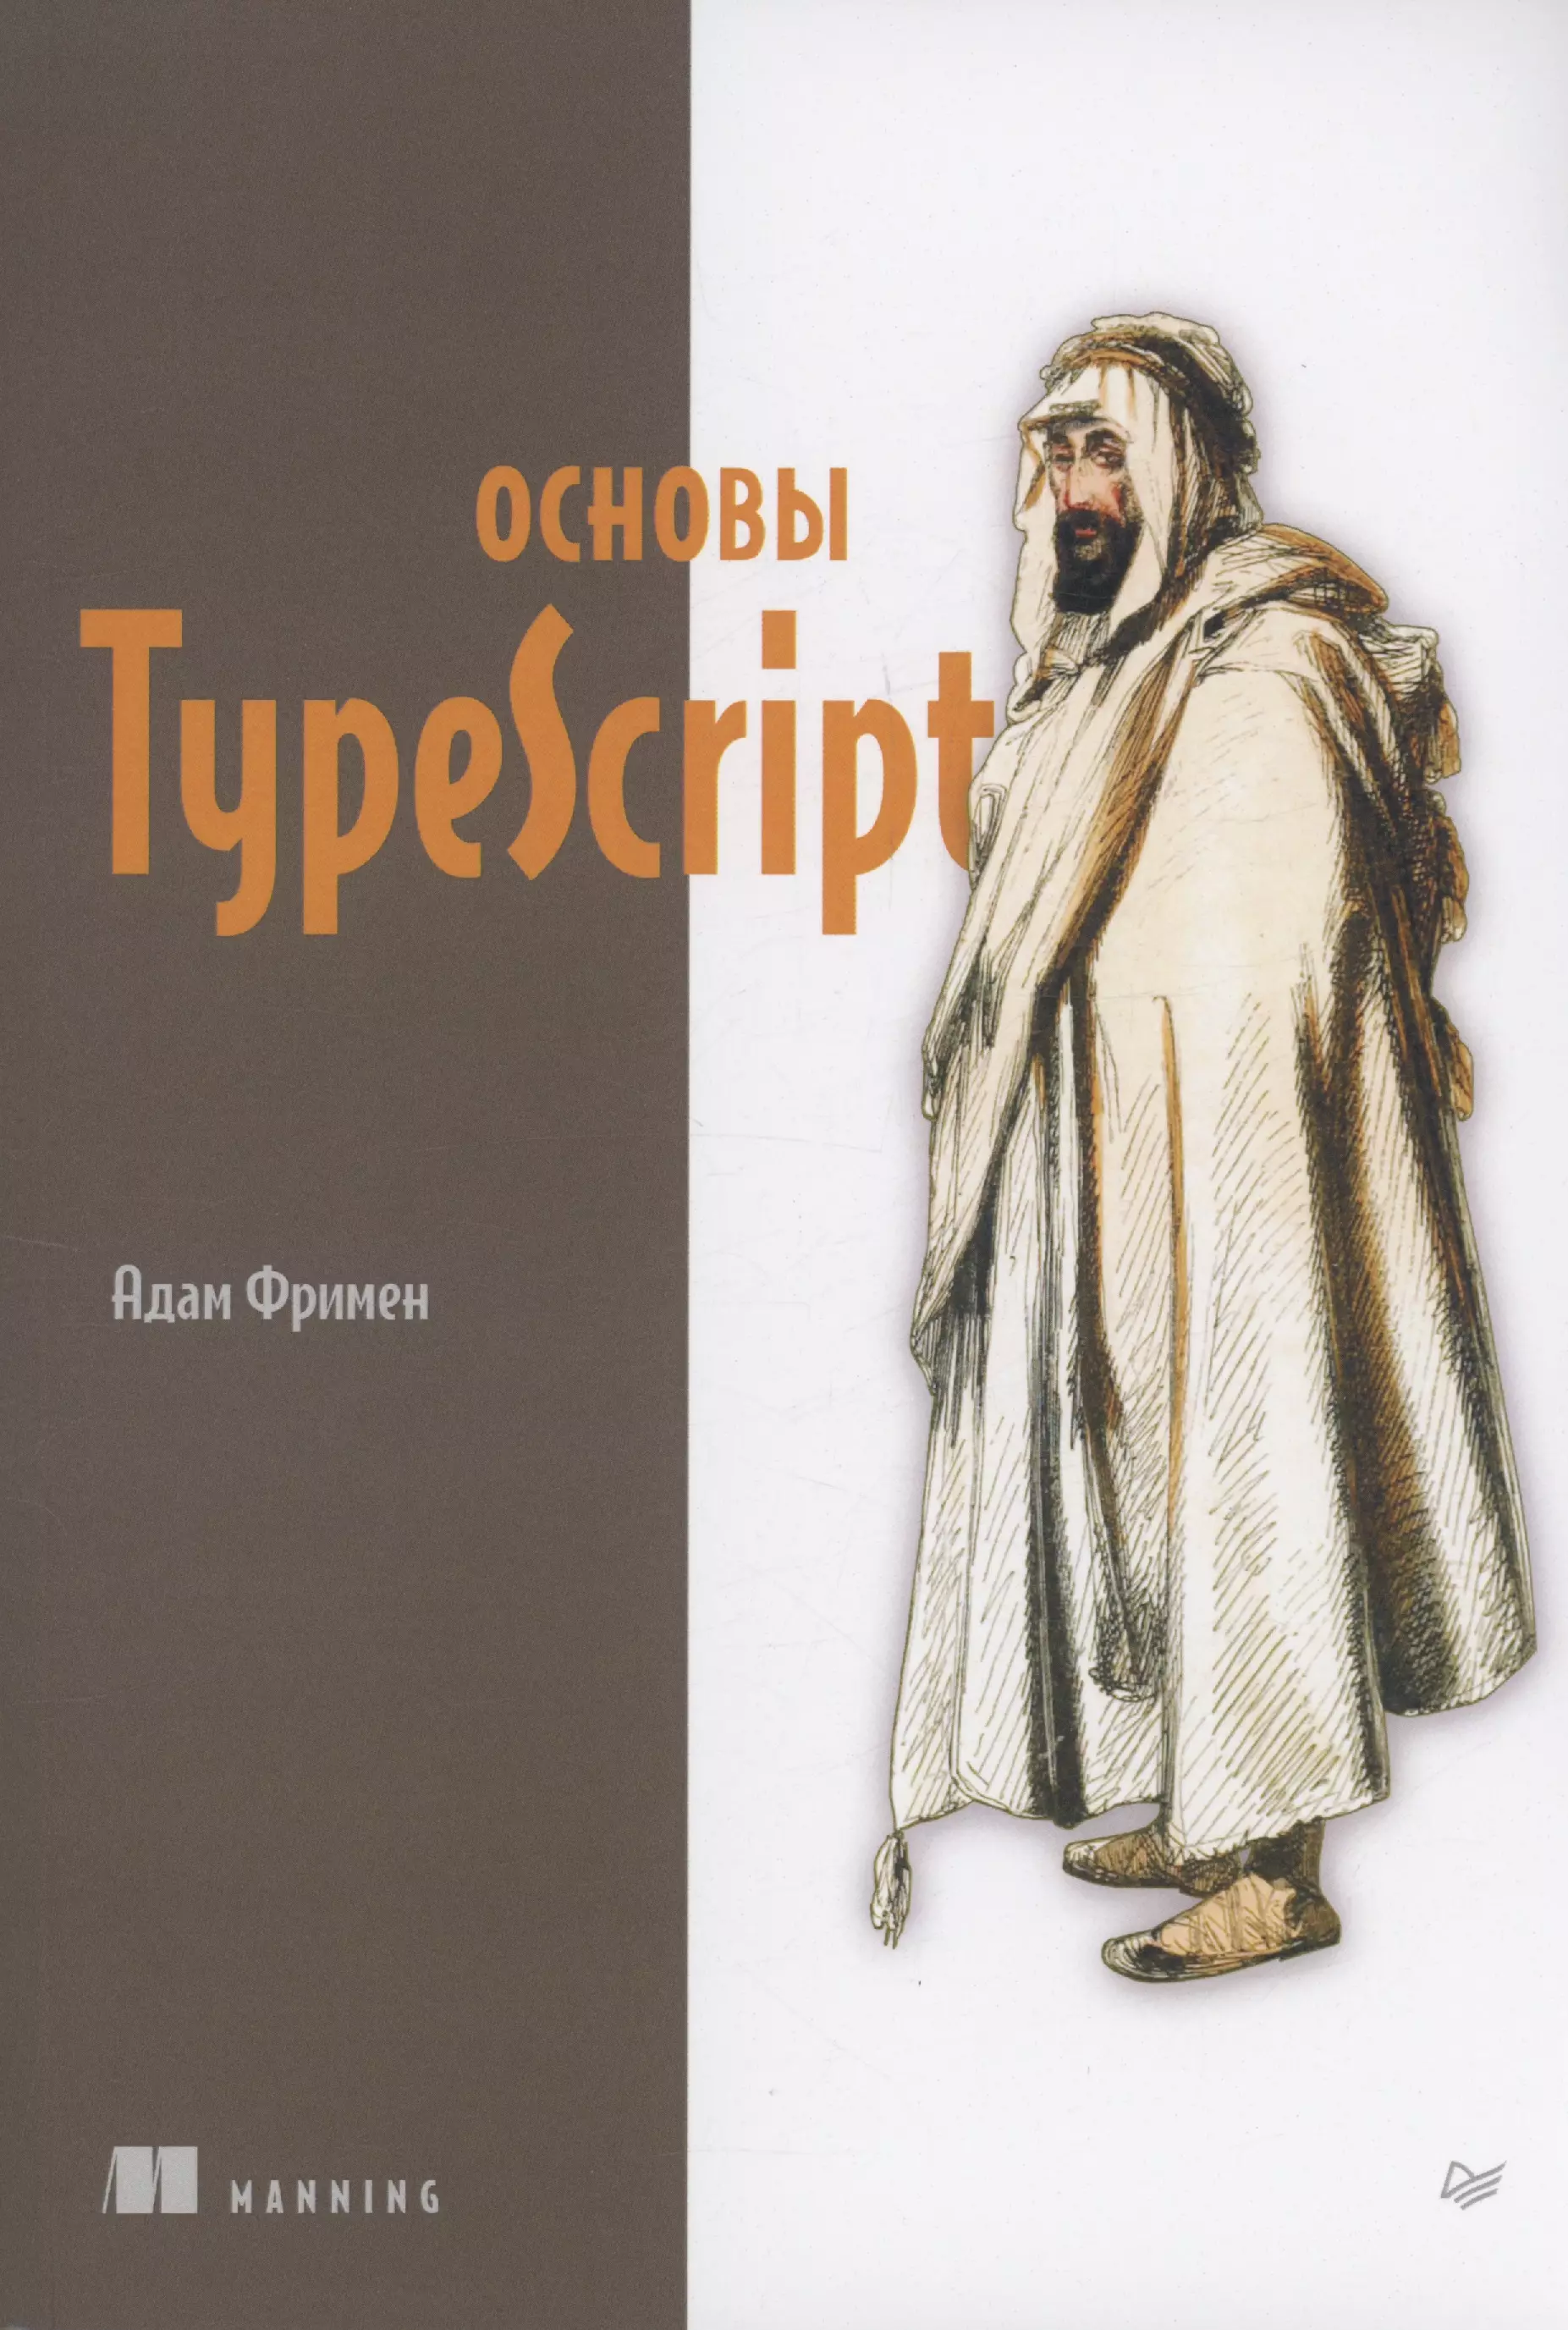 Фримен Адам Основы TypeScript розенталс натан изучаем typescript 3